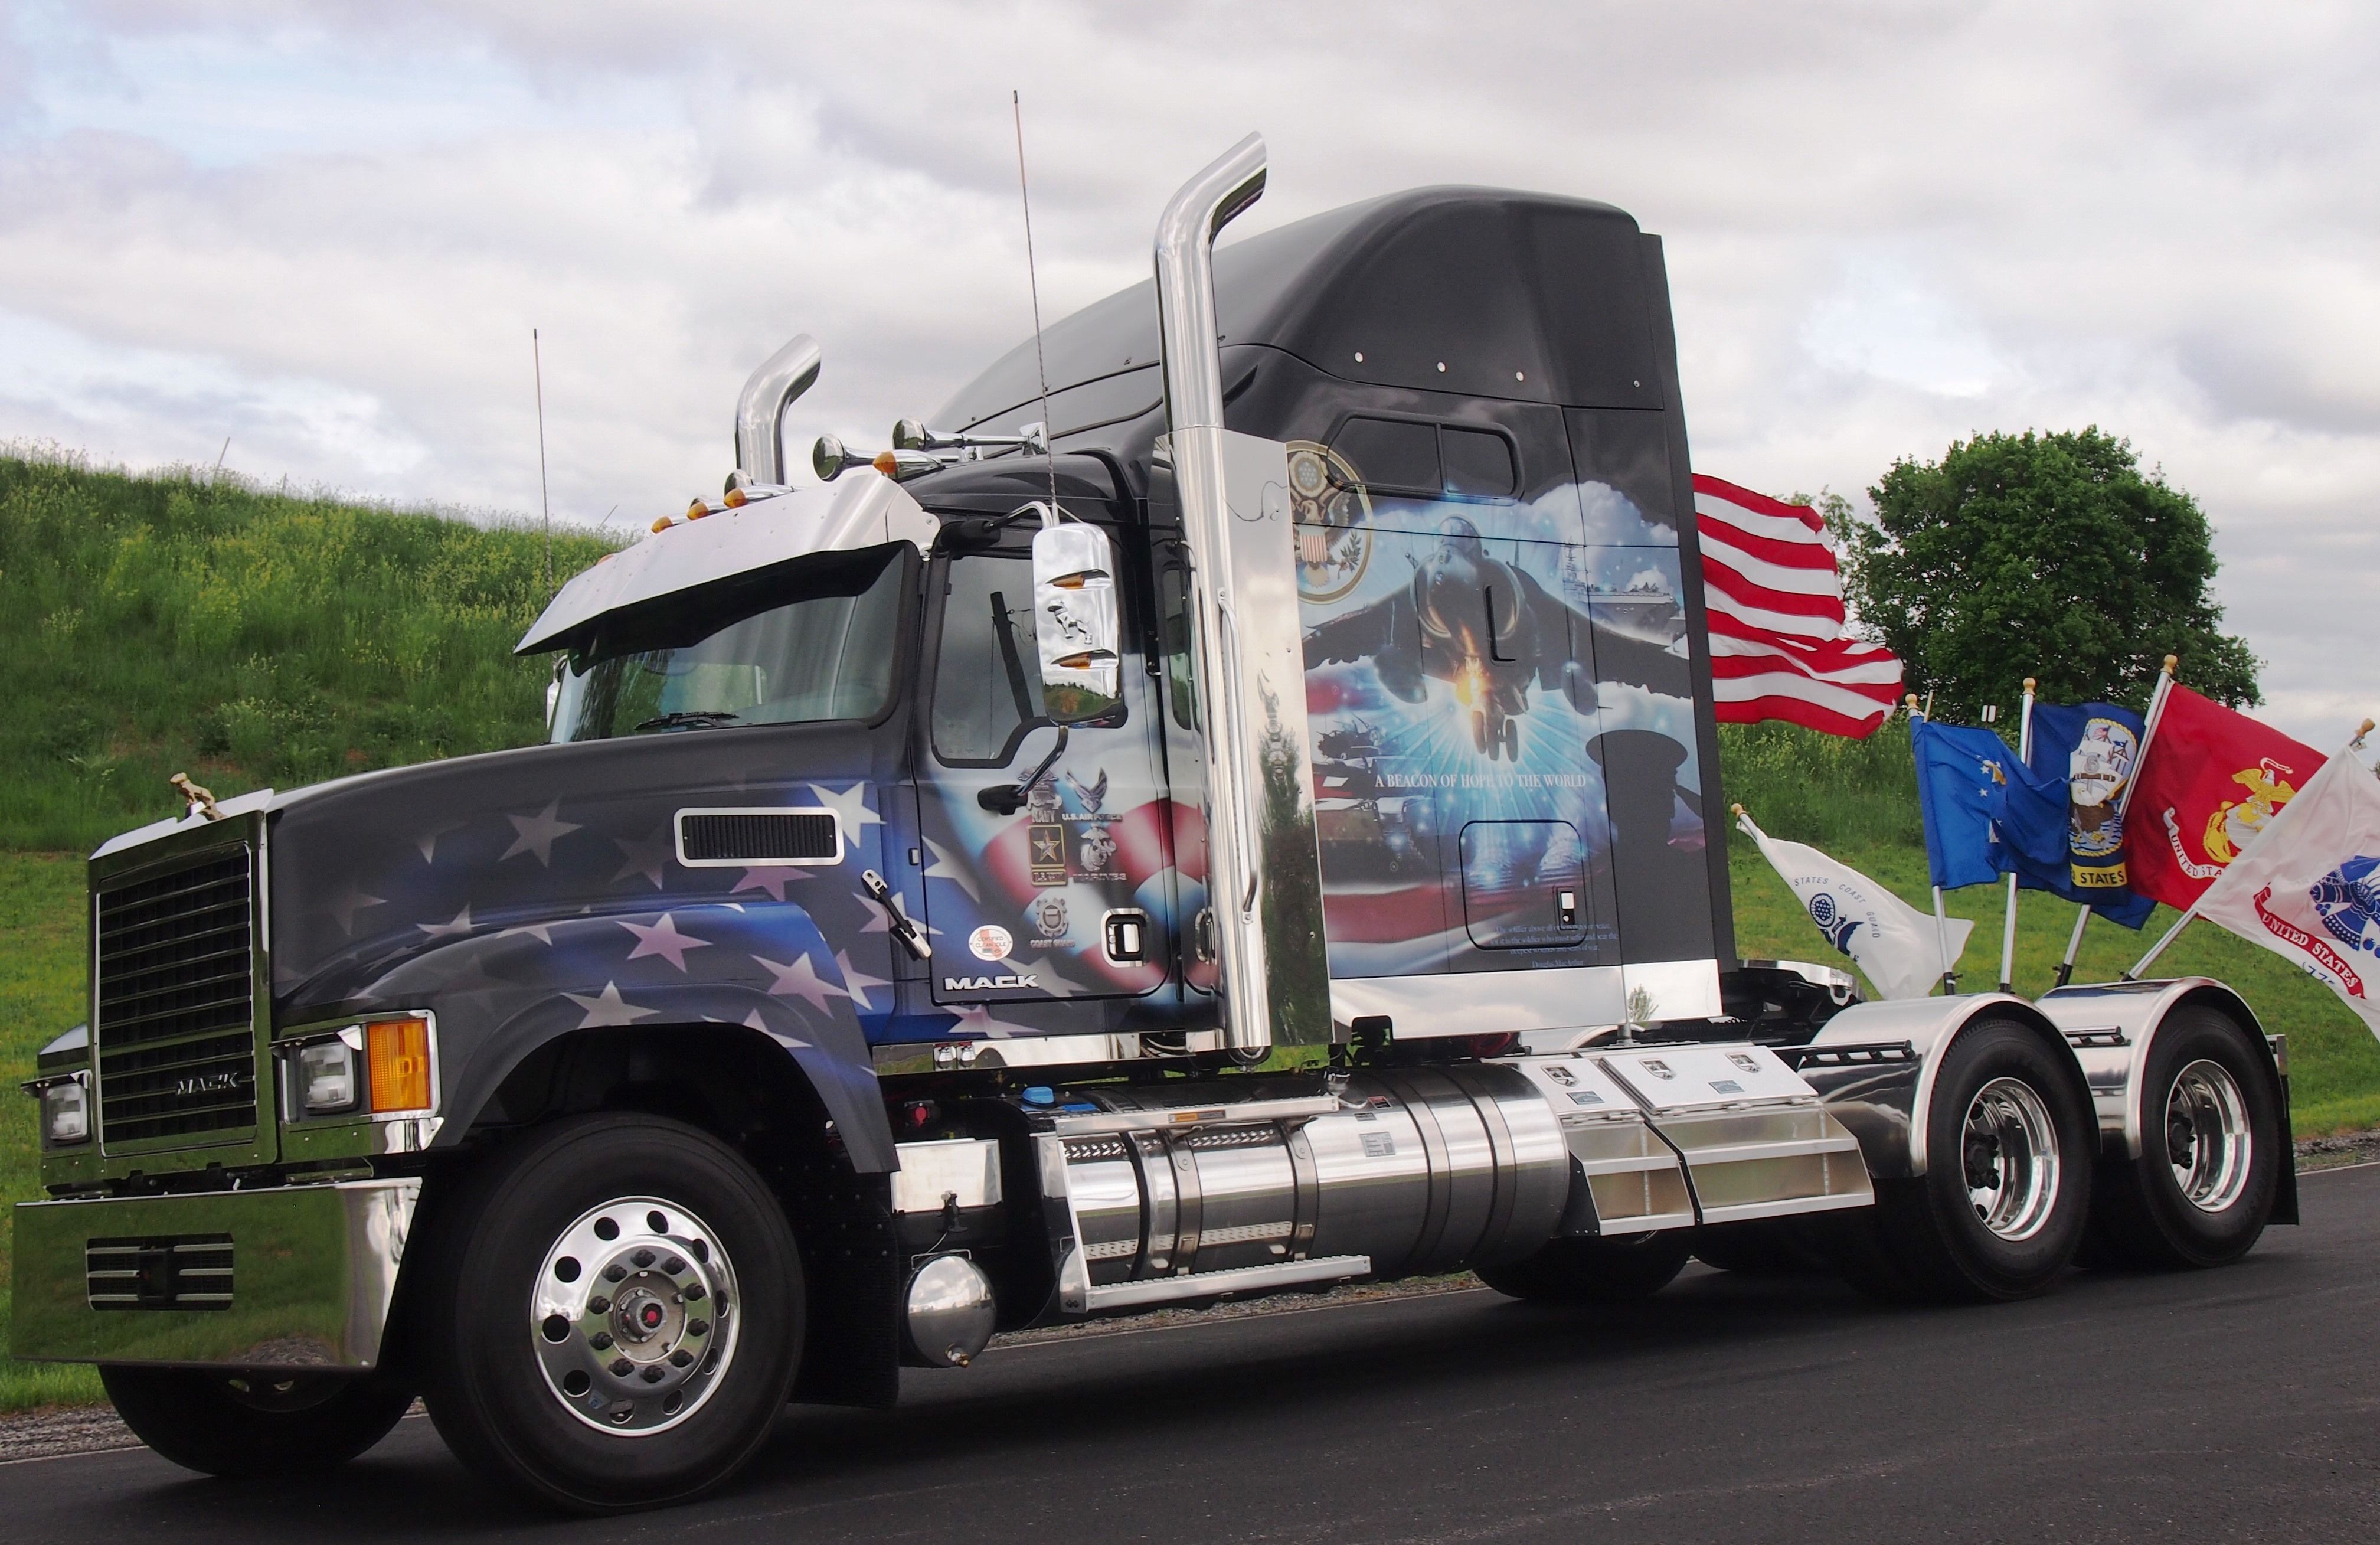 Volvo, Mack honor service members with Memorial Day tribute trucks